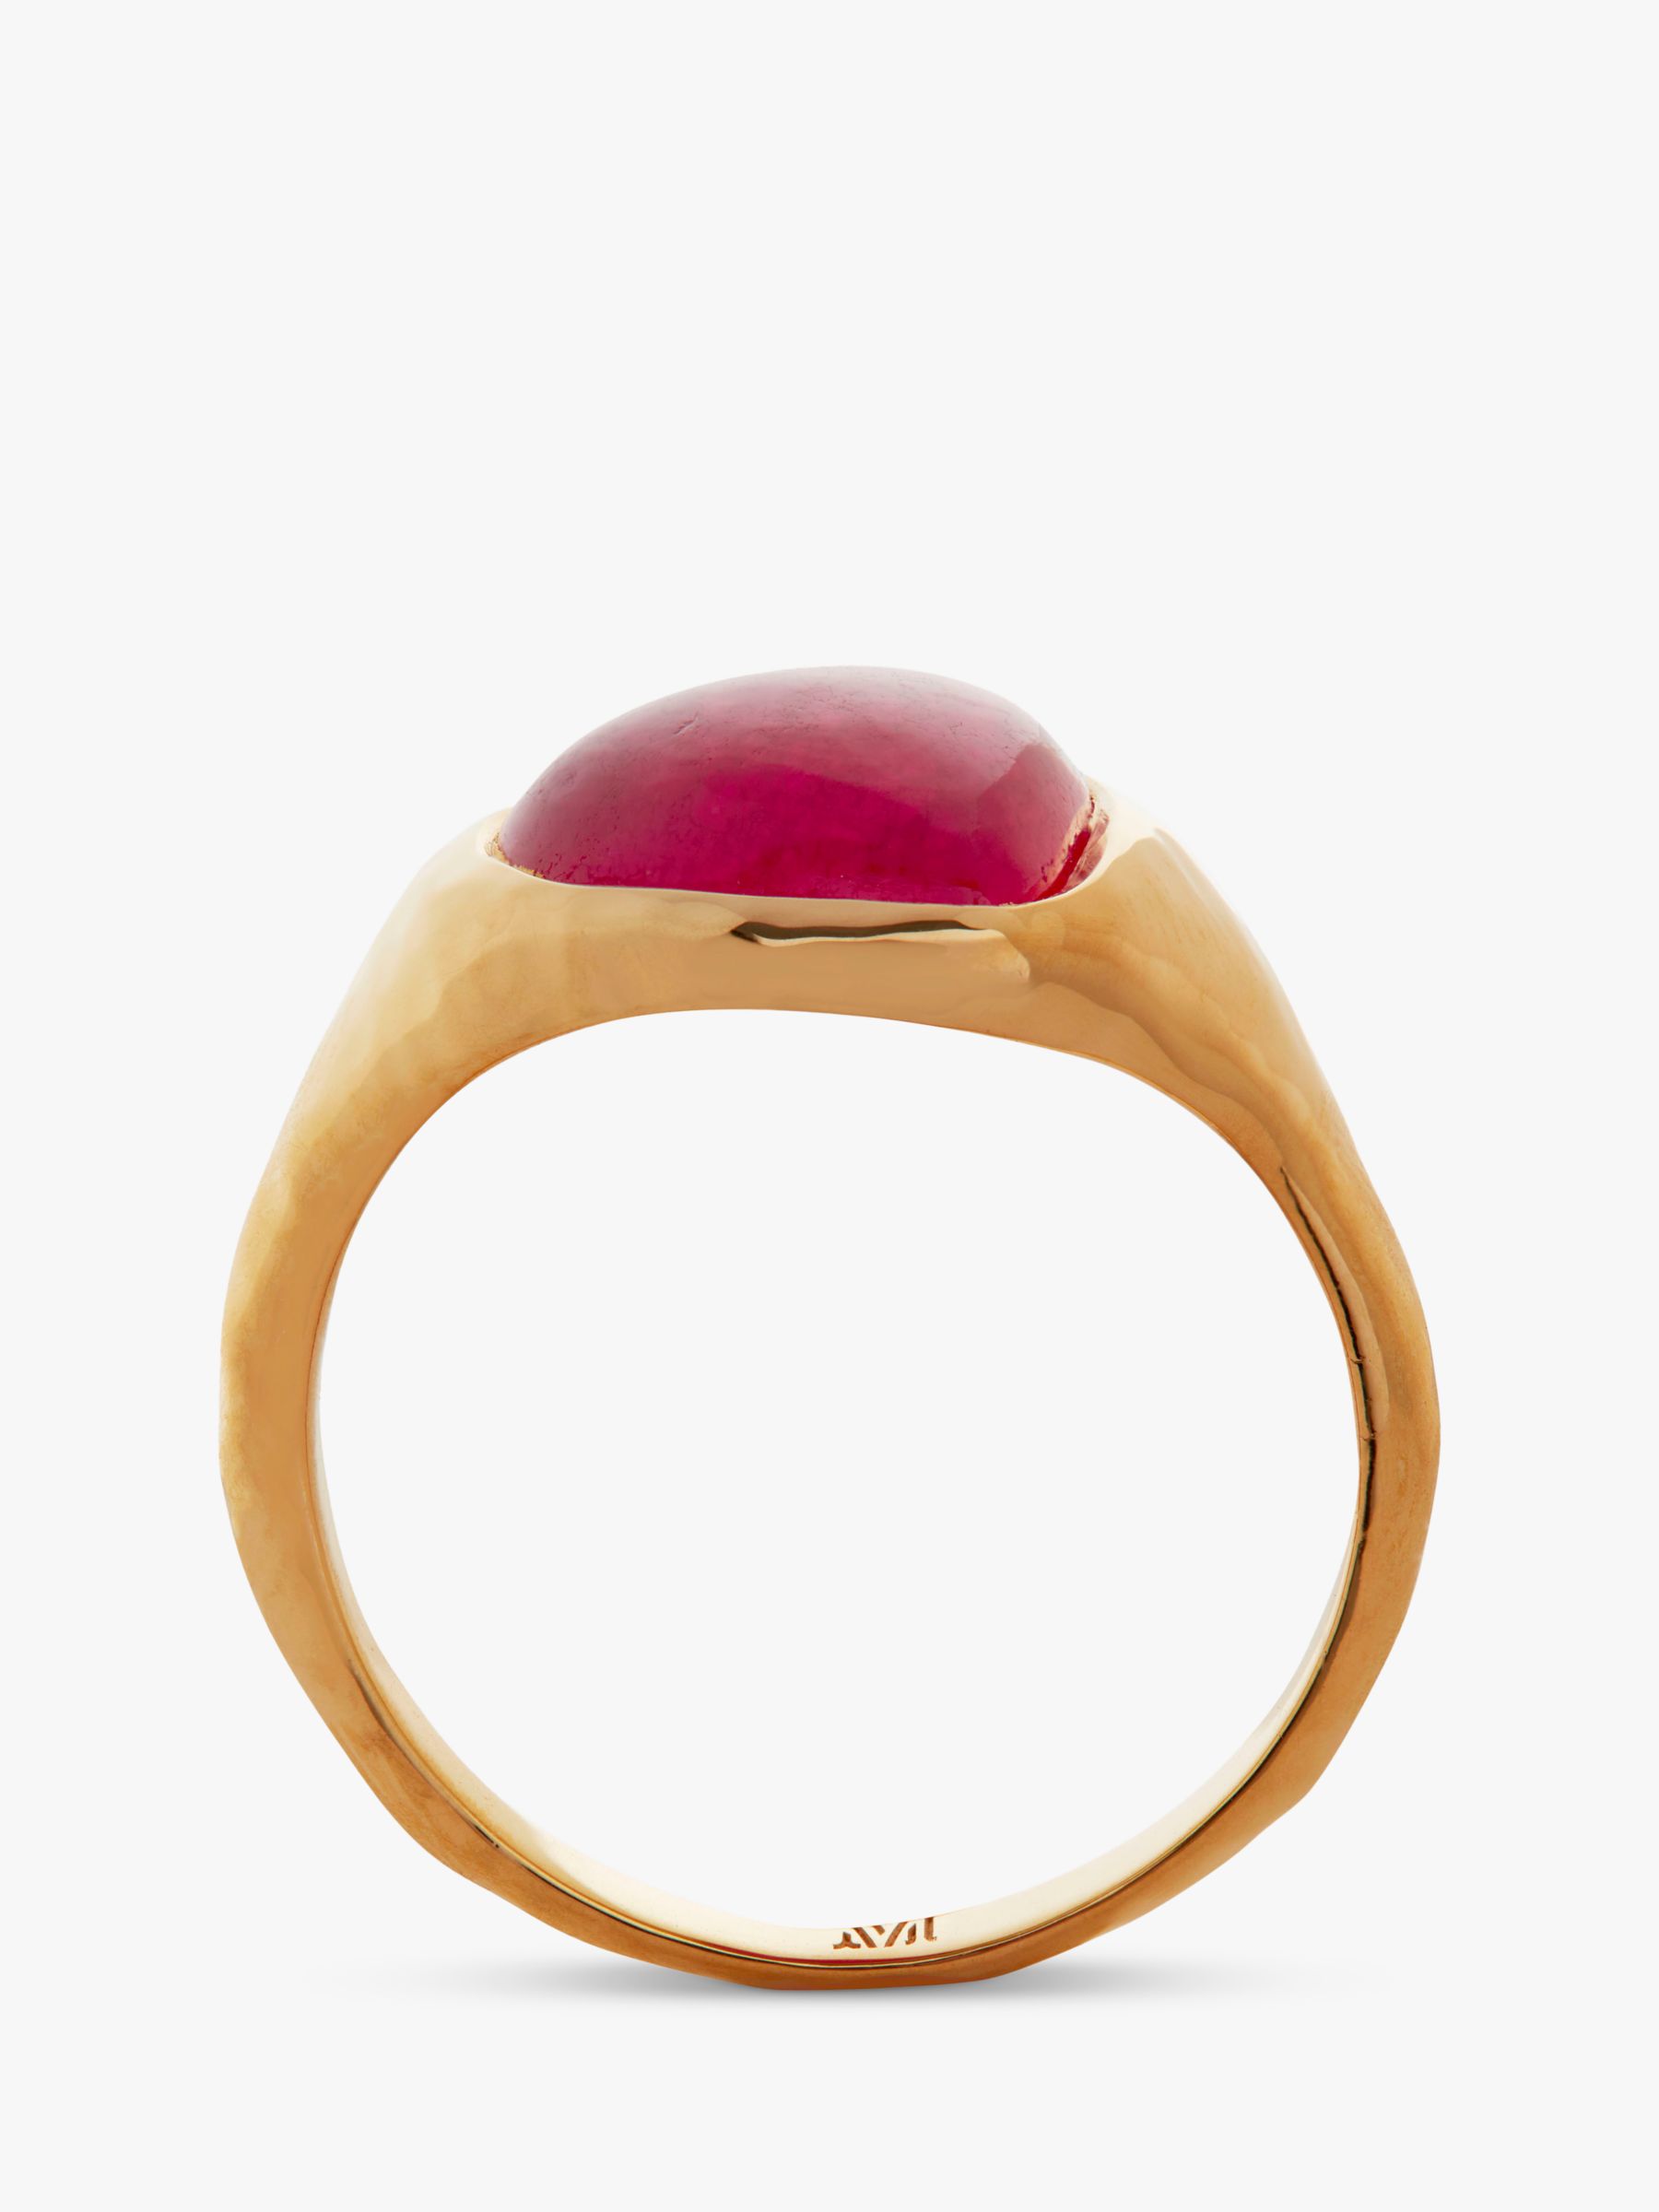 Monica Vinader Rio Pink Quartz Ring, Gold, I